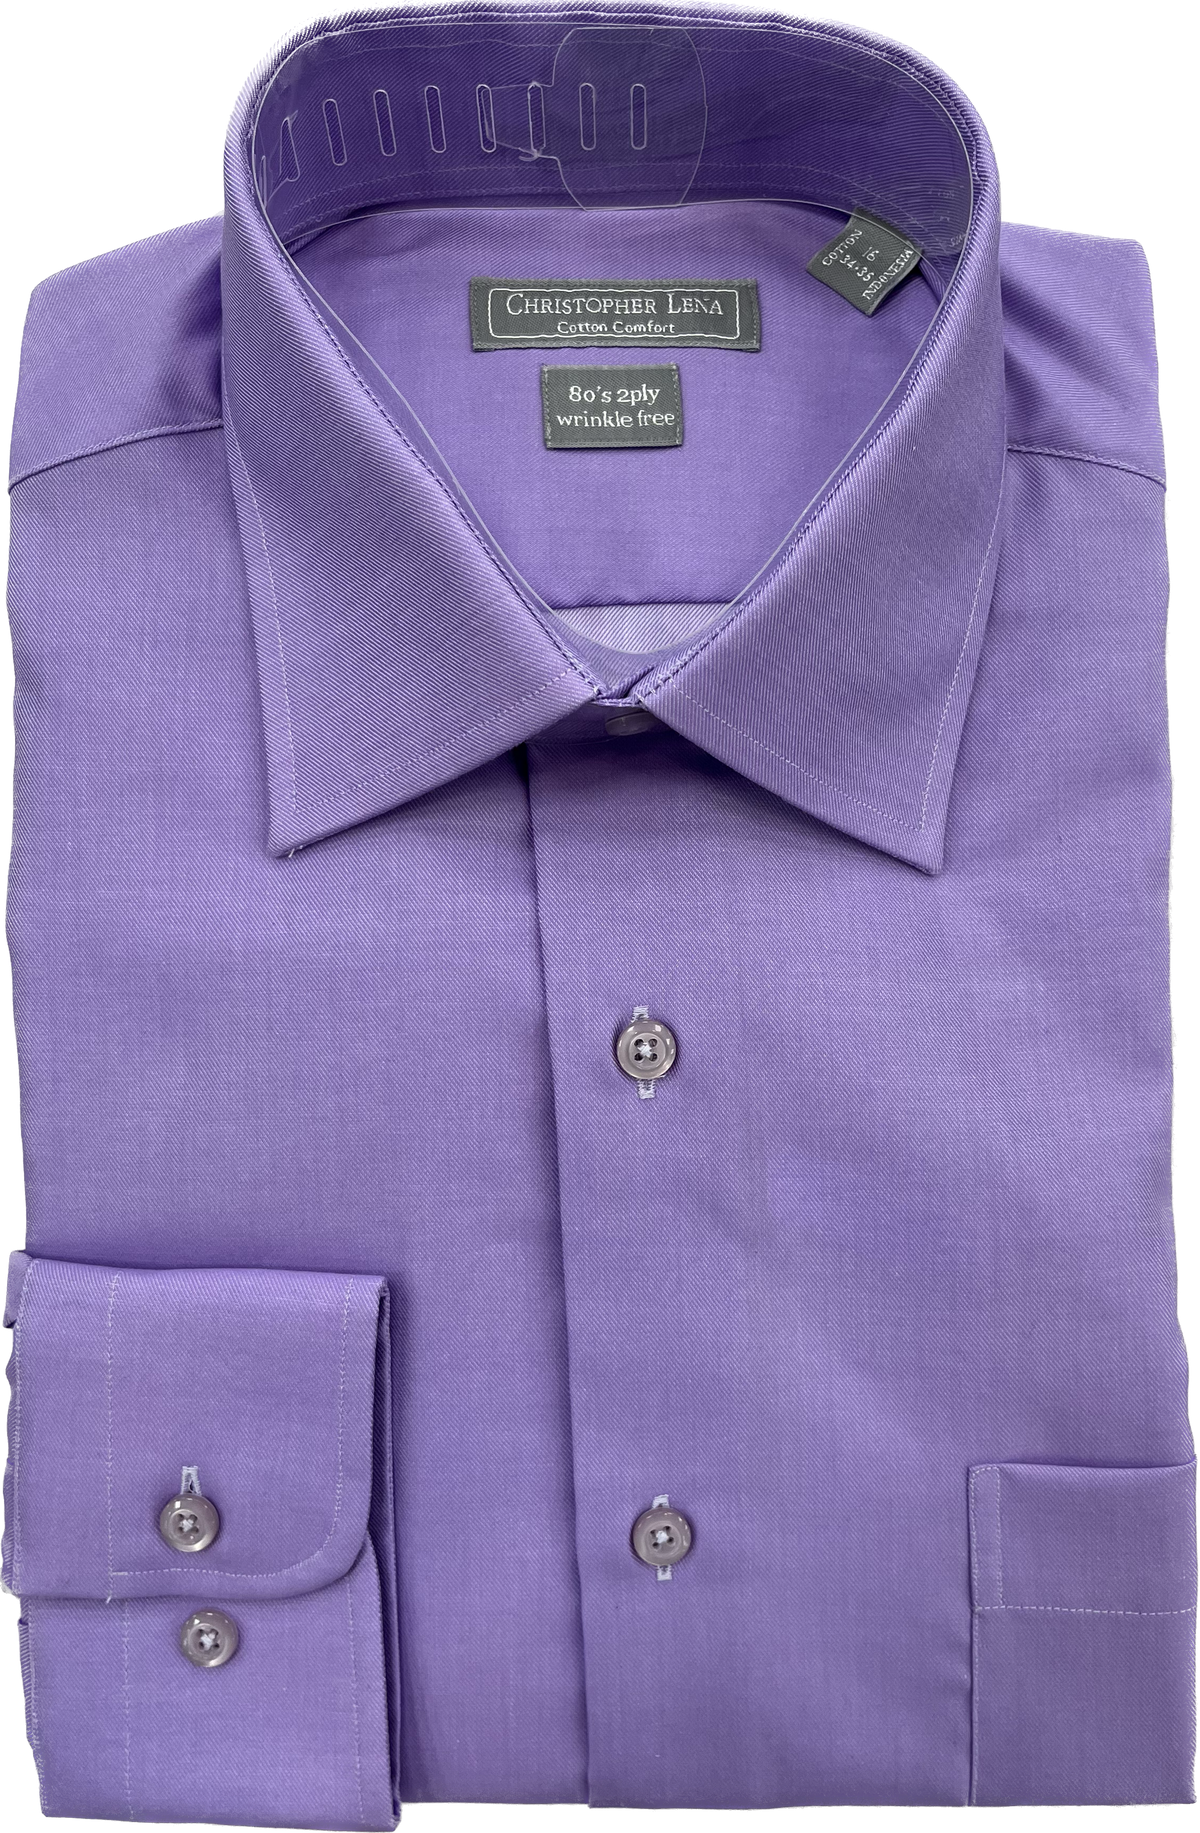 Christopher Lena Lavender Spread Collar Shirt